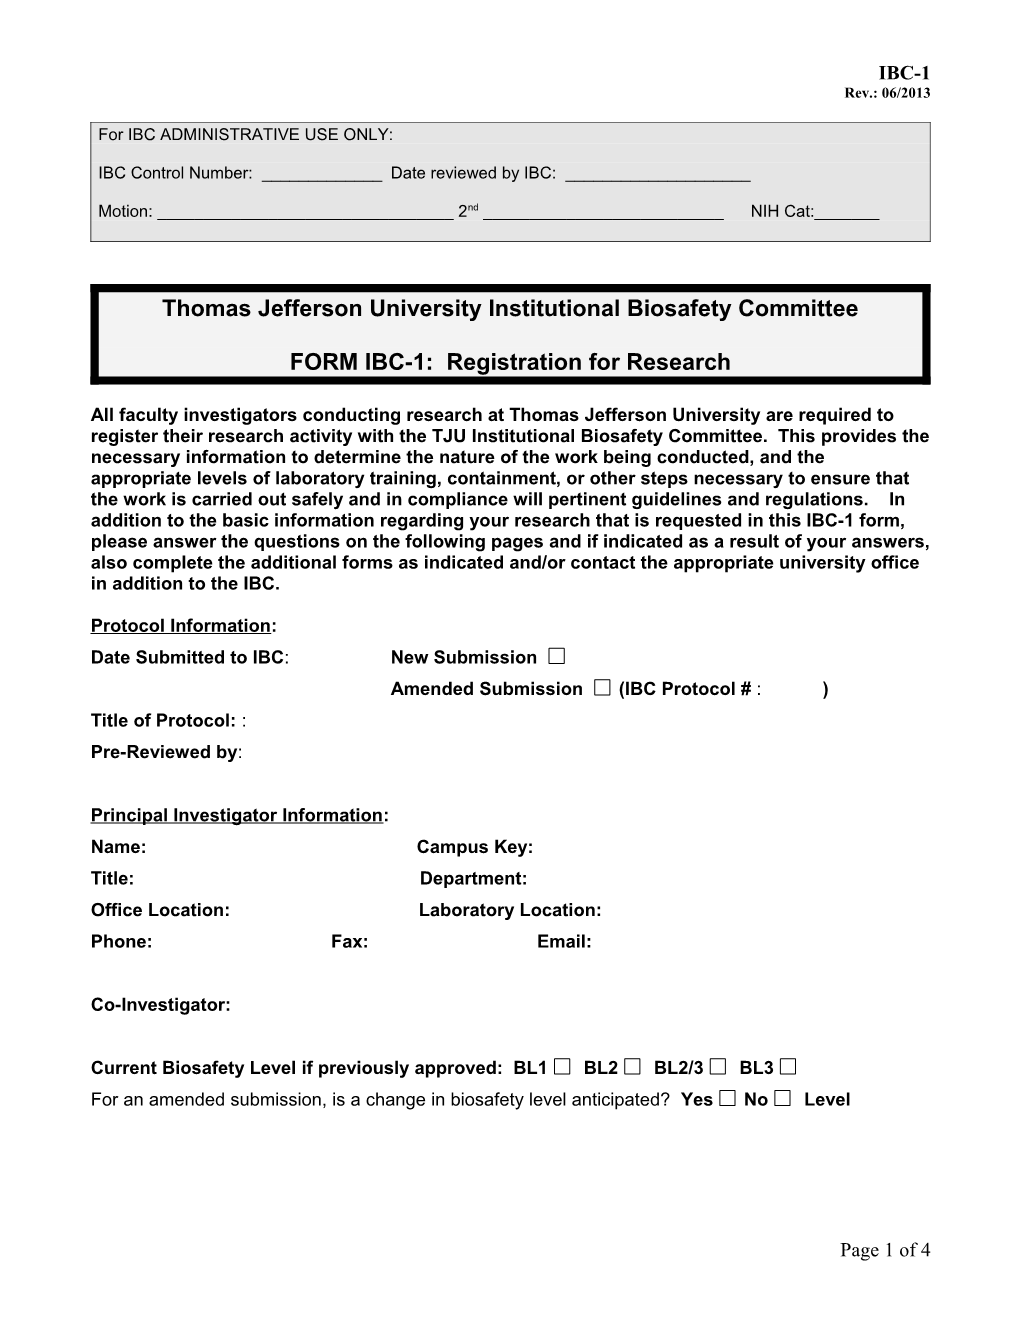 Thomas Jefferson University Institutional Biosafety Committee